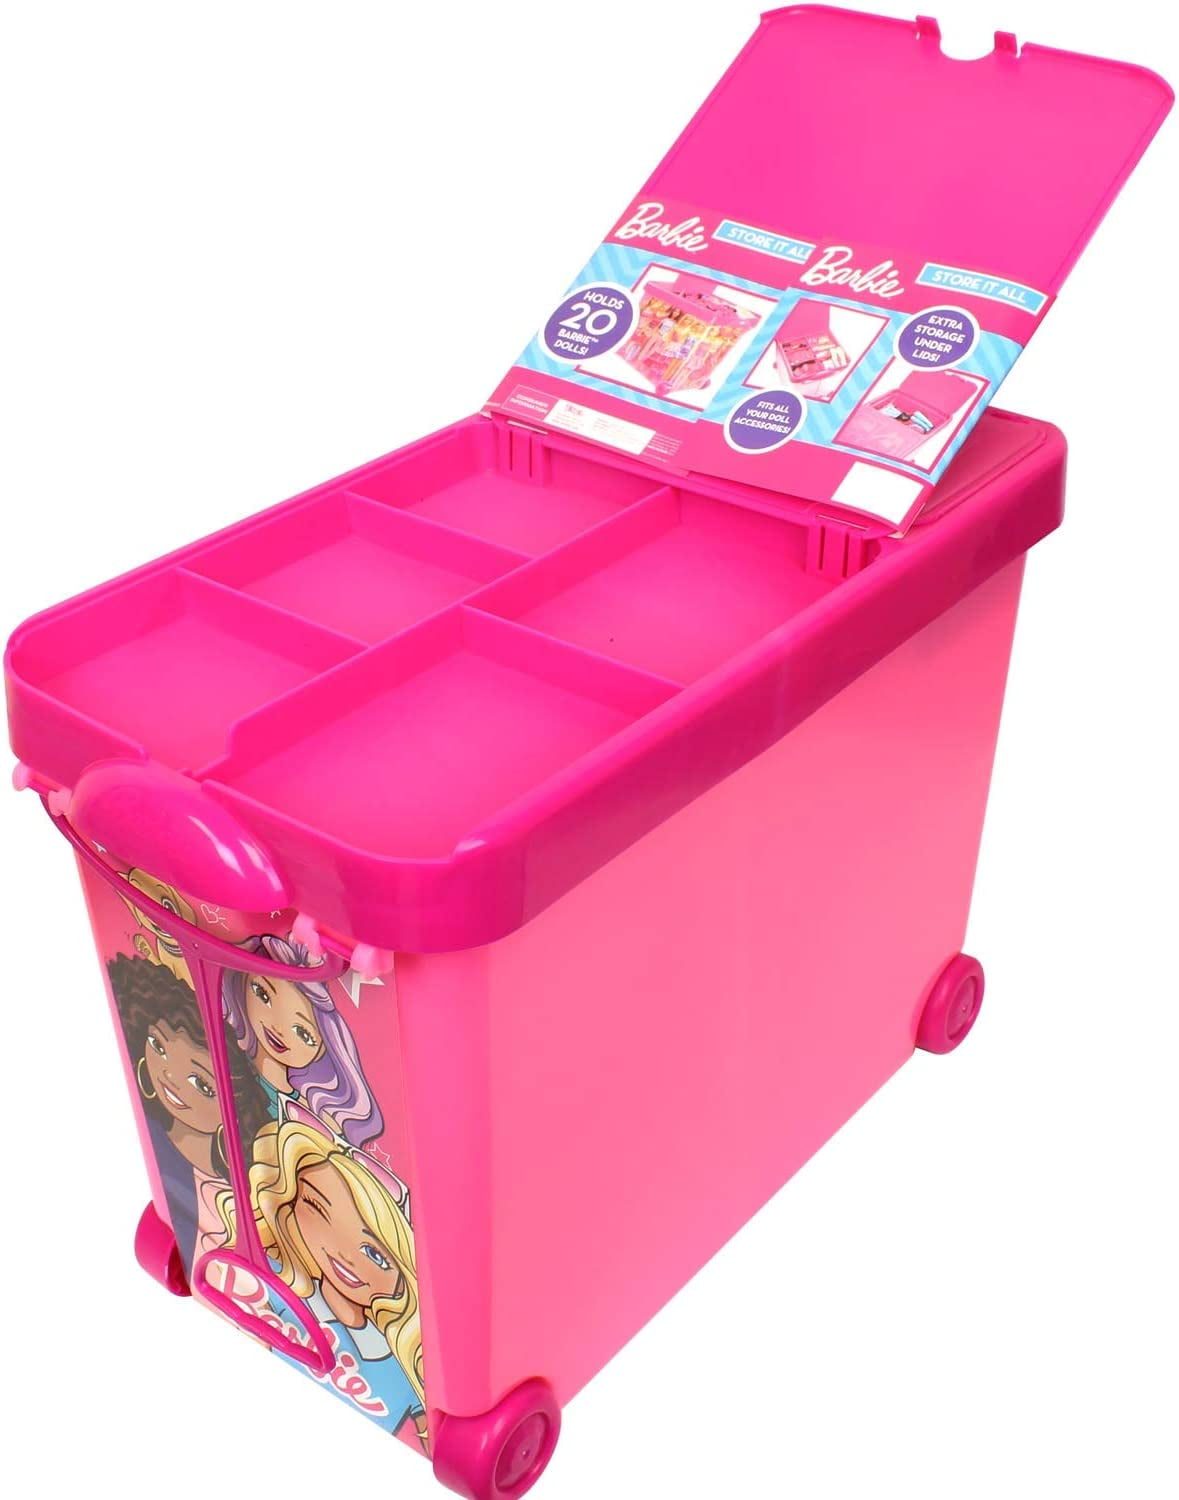 Barbie Storage & Organization